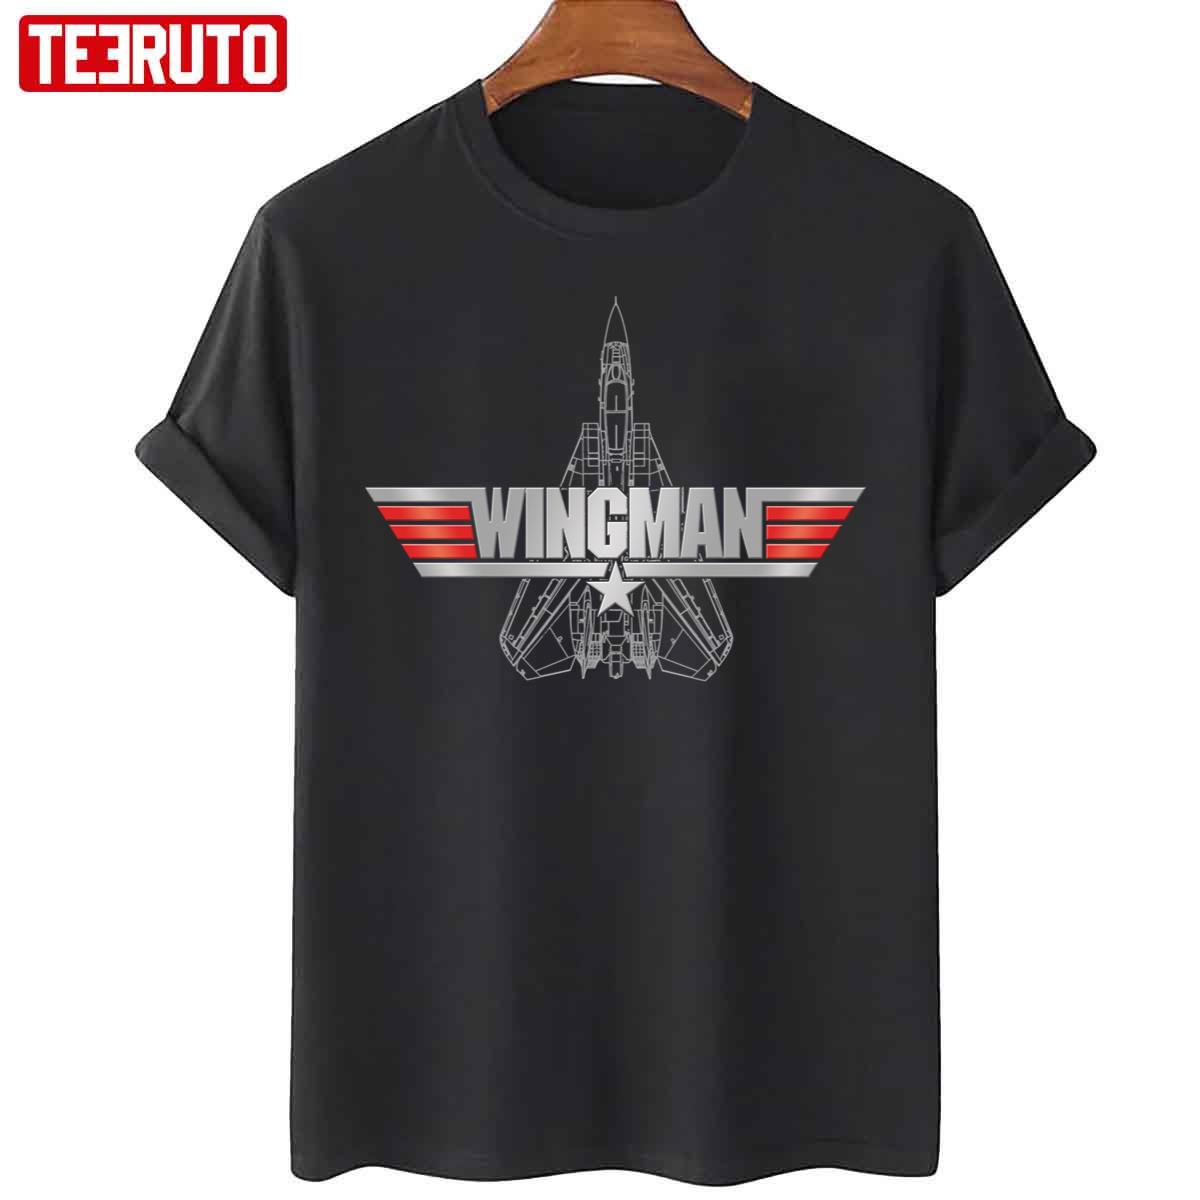 Top Gun Wingman Unisex T-Shirt